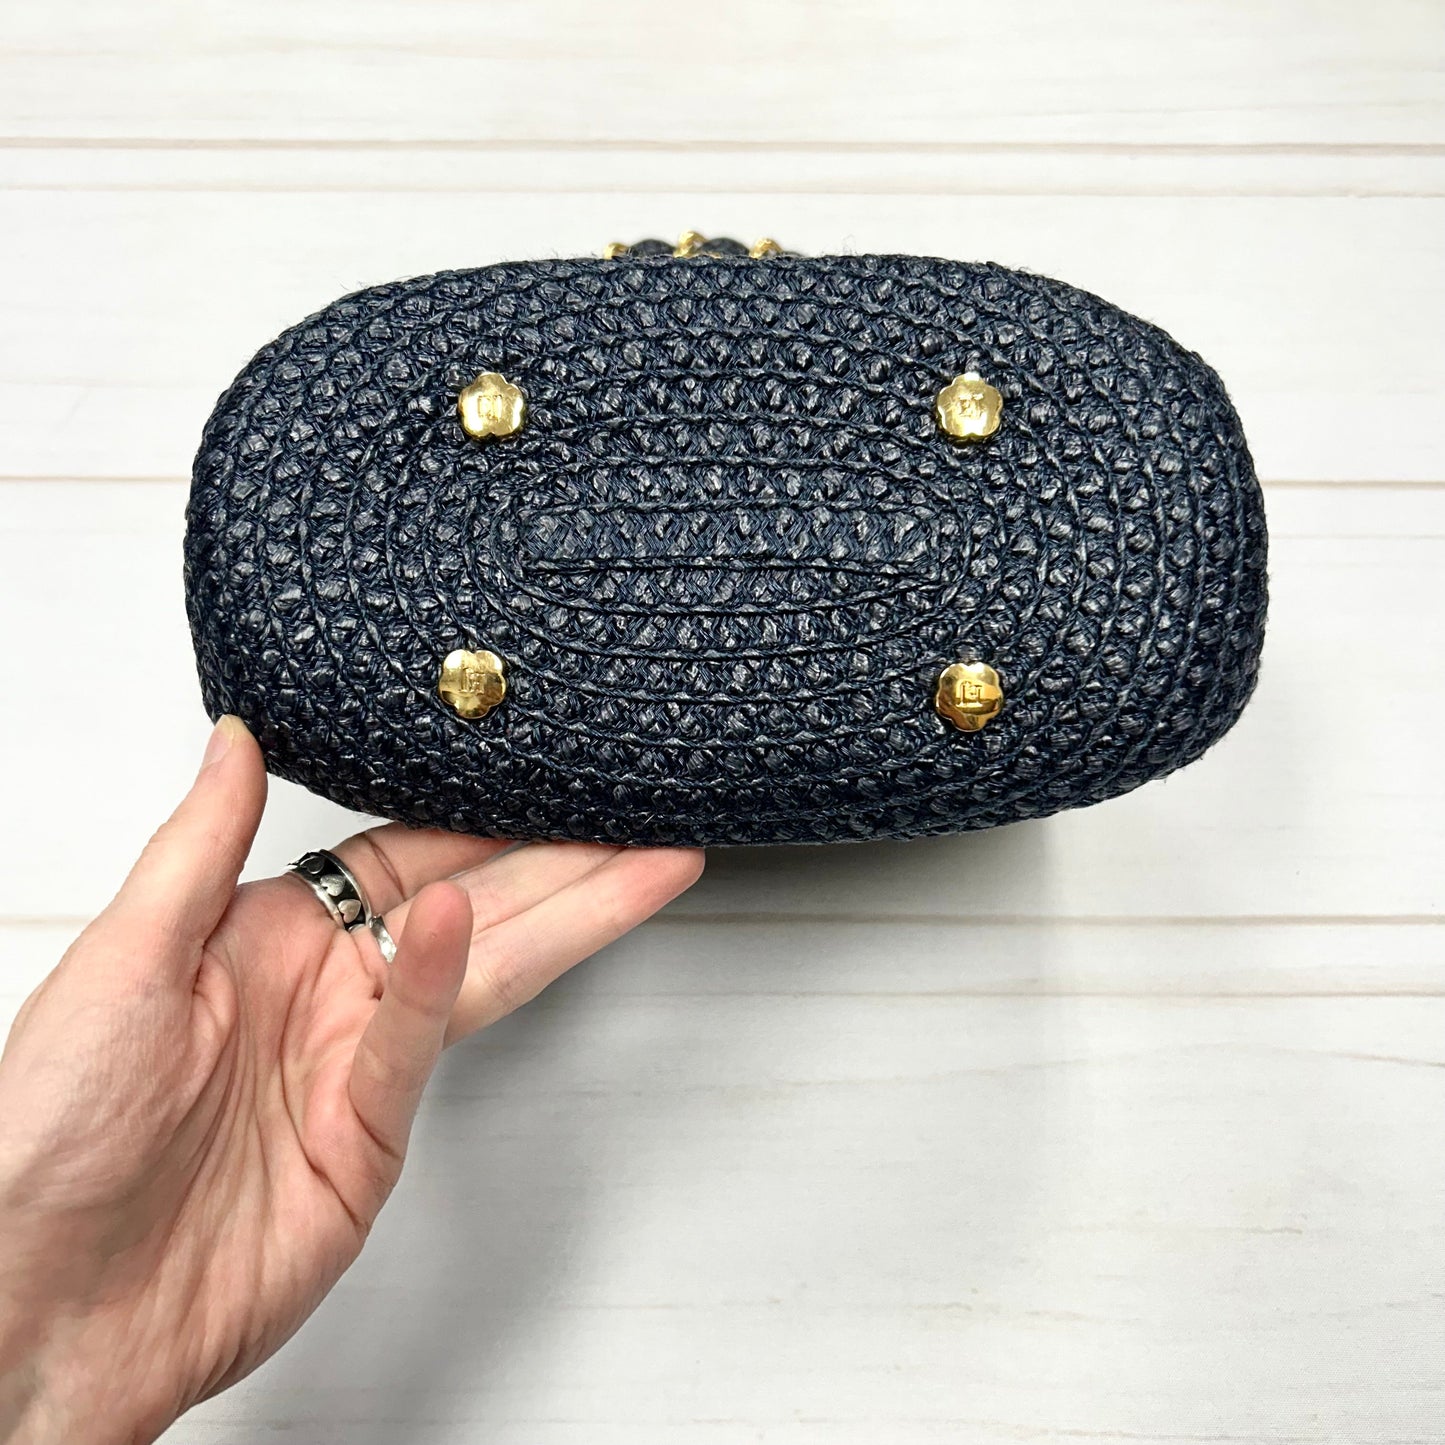 Handbag Designer By Eric Javits Size: Small